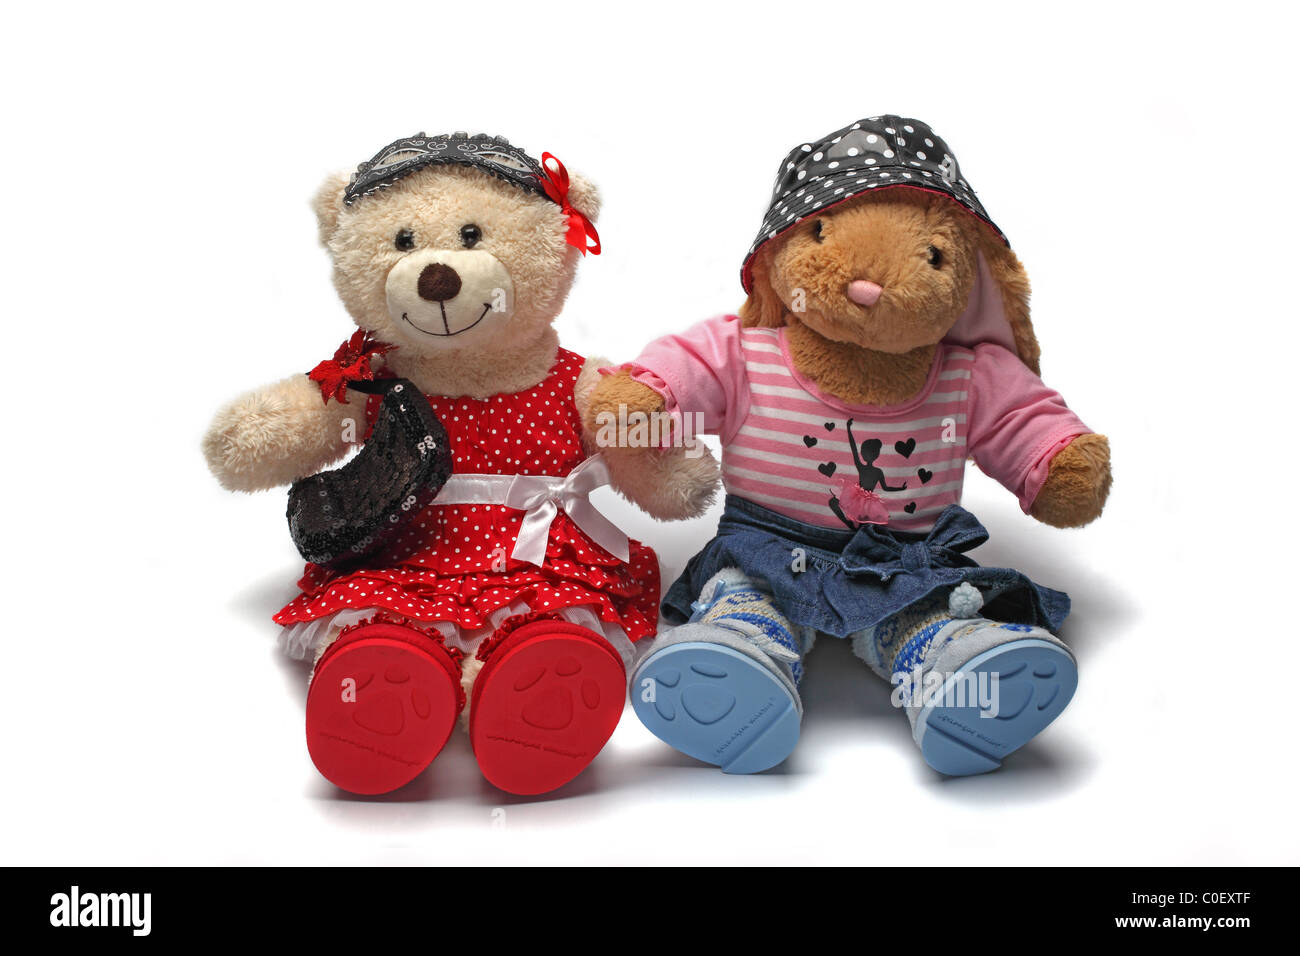 Build A Bear stuffed toy Stock Photo